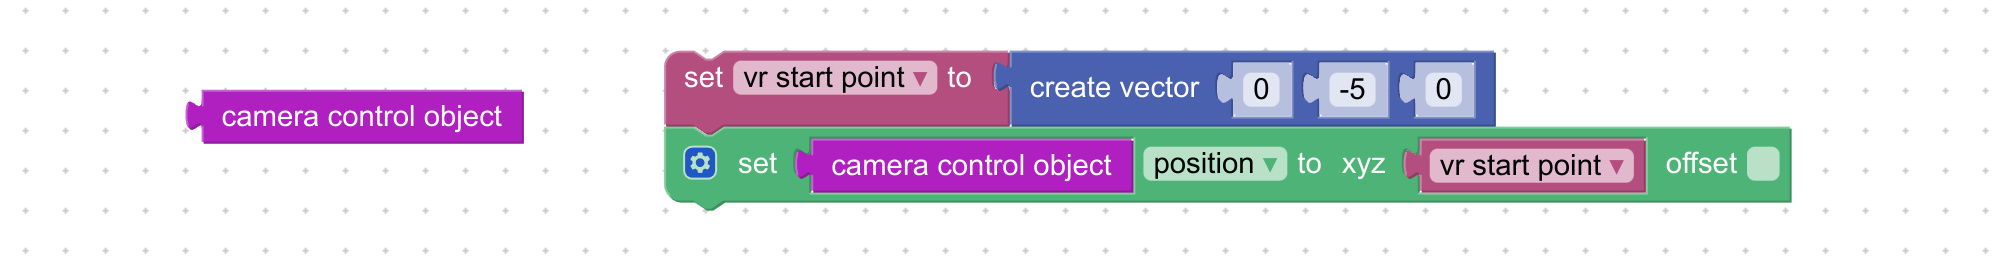 Visual block to retrieve camera control object in AR/VR mode